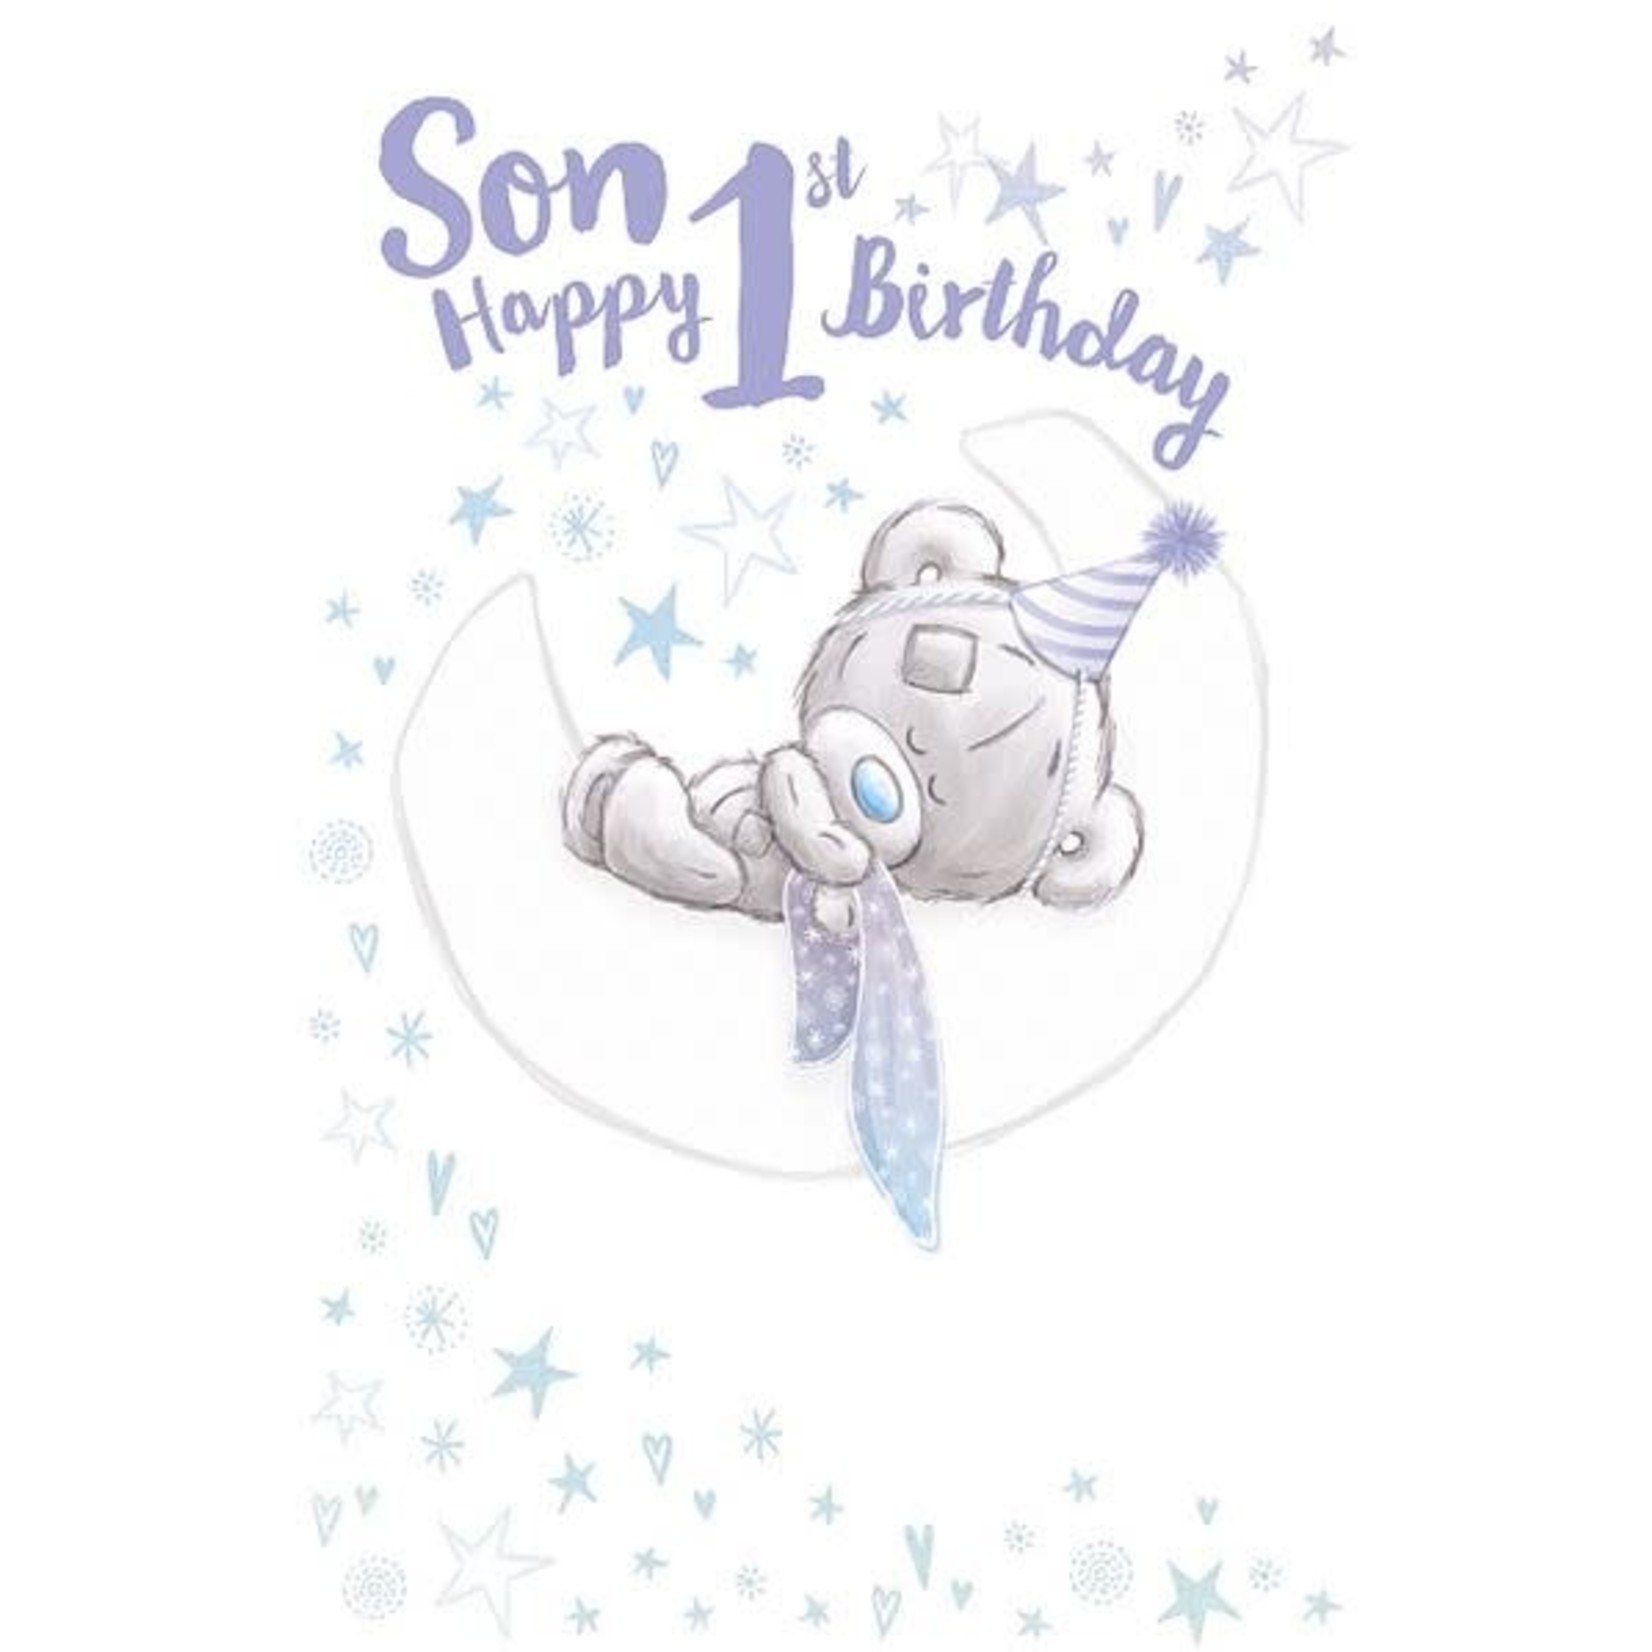 Tatty Ted Happy 1st Birthday Card - Son